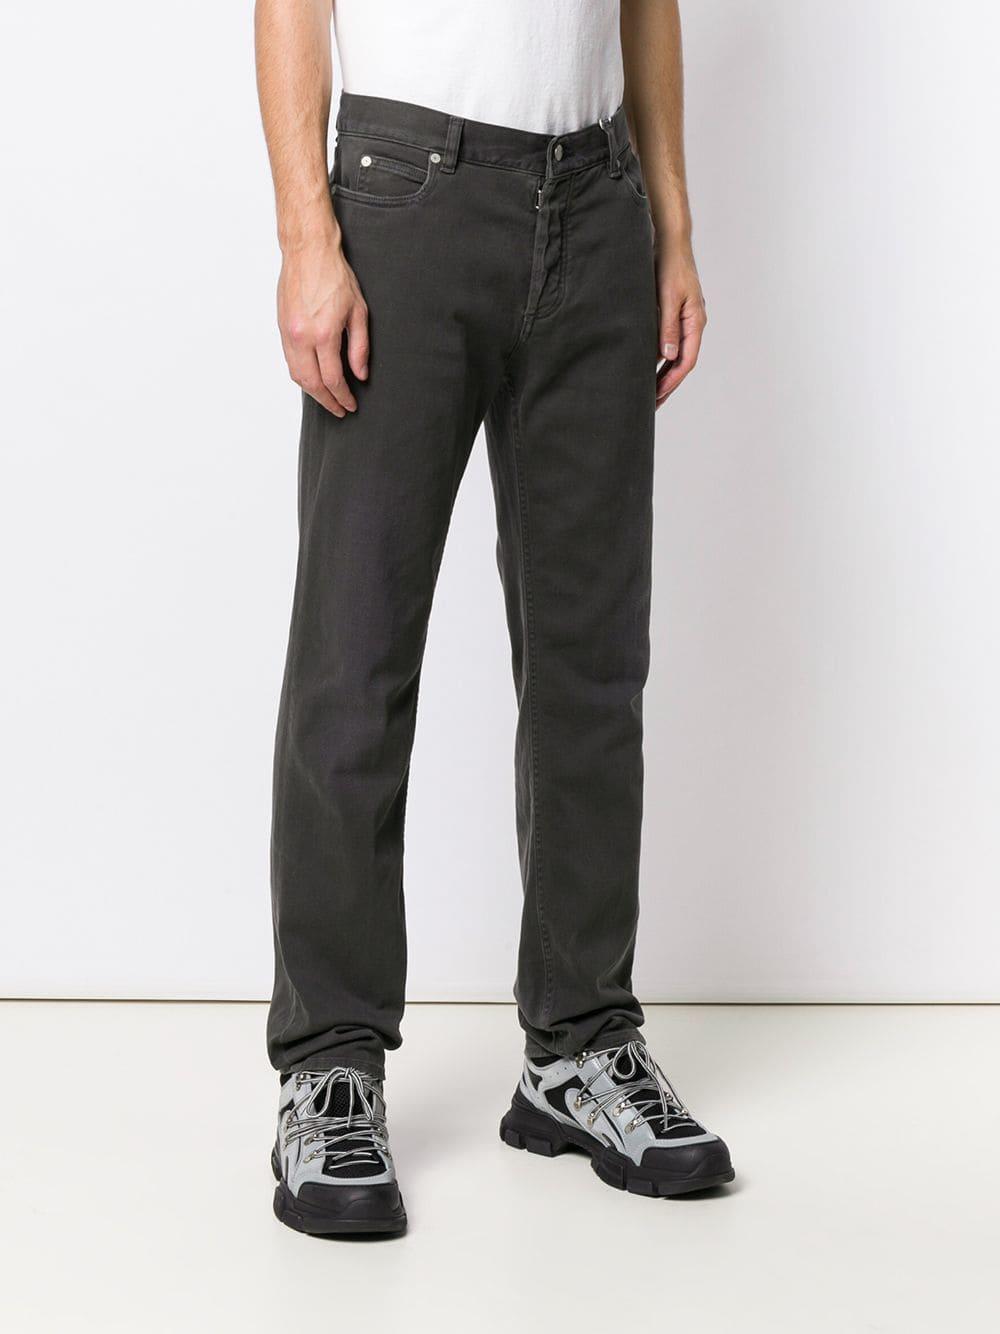 Maison Margiela Denim Classic Slim-fit Jeans in Grey (Gray) for Men - Lyst